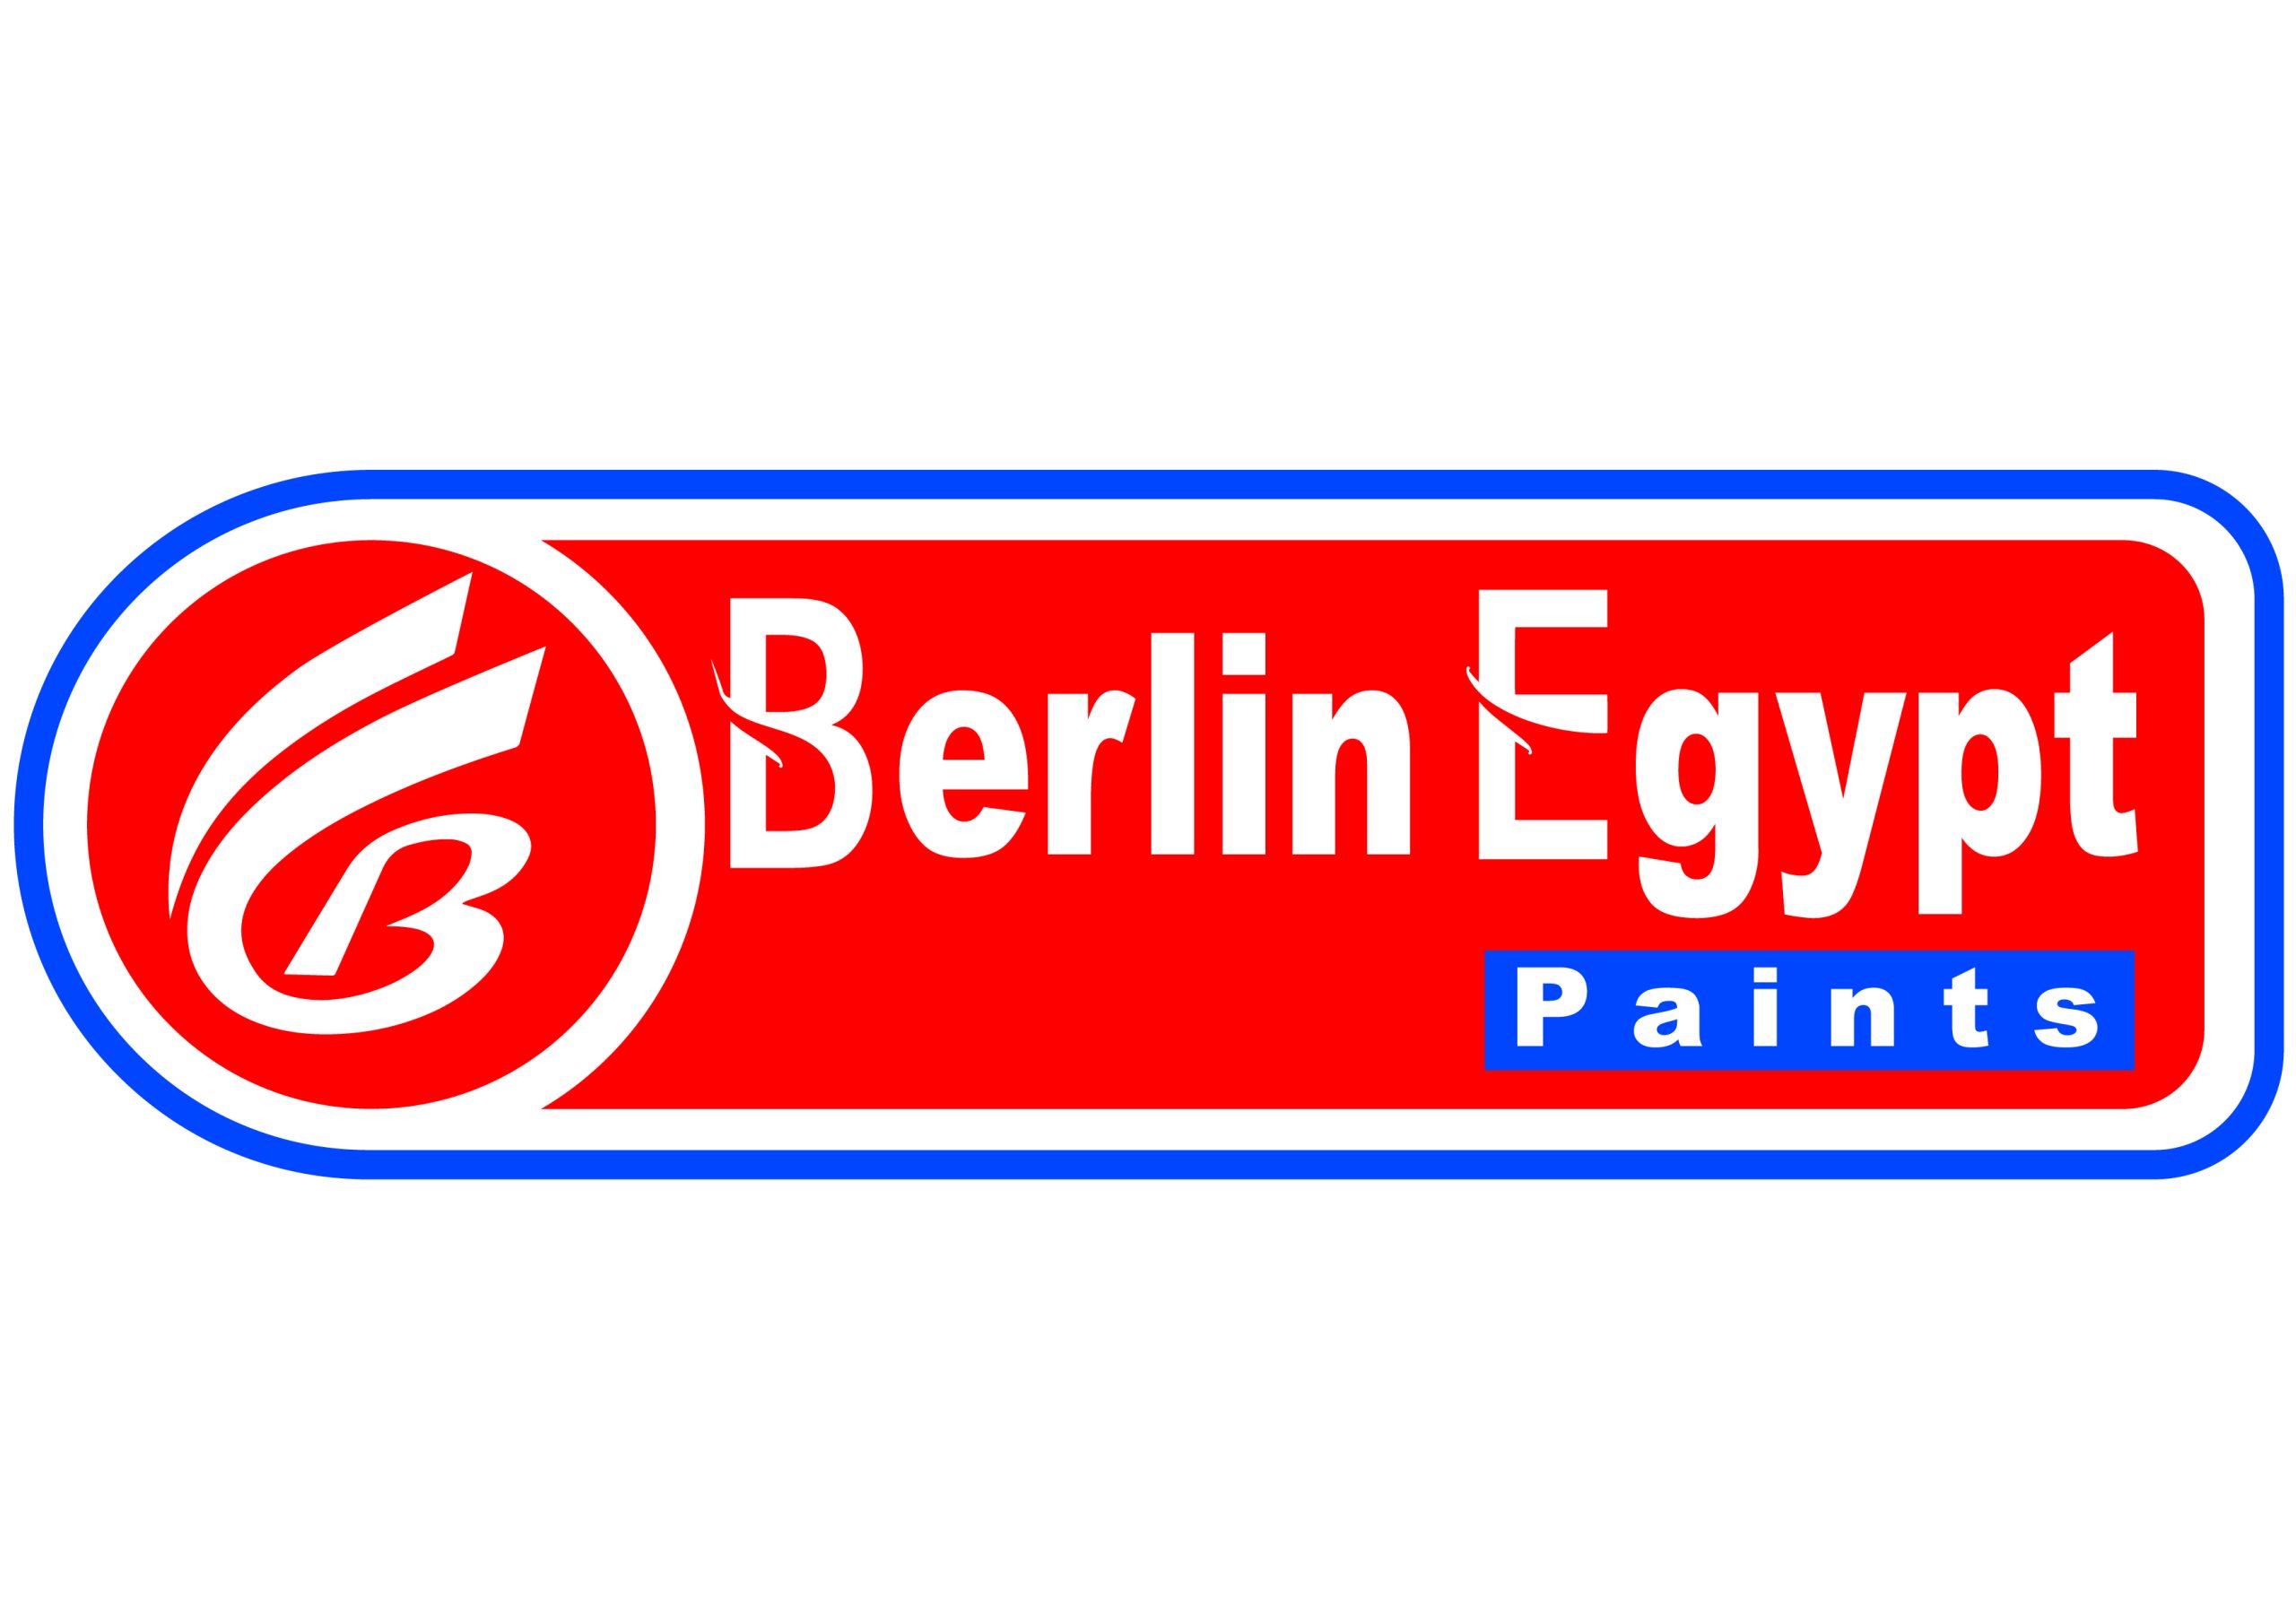 Berlin Egypt